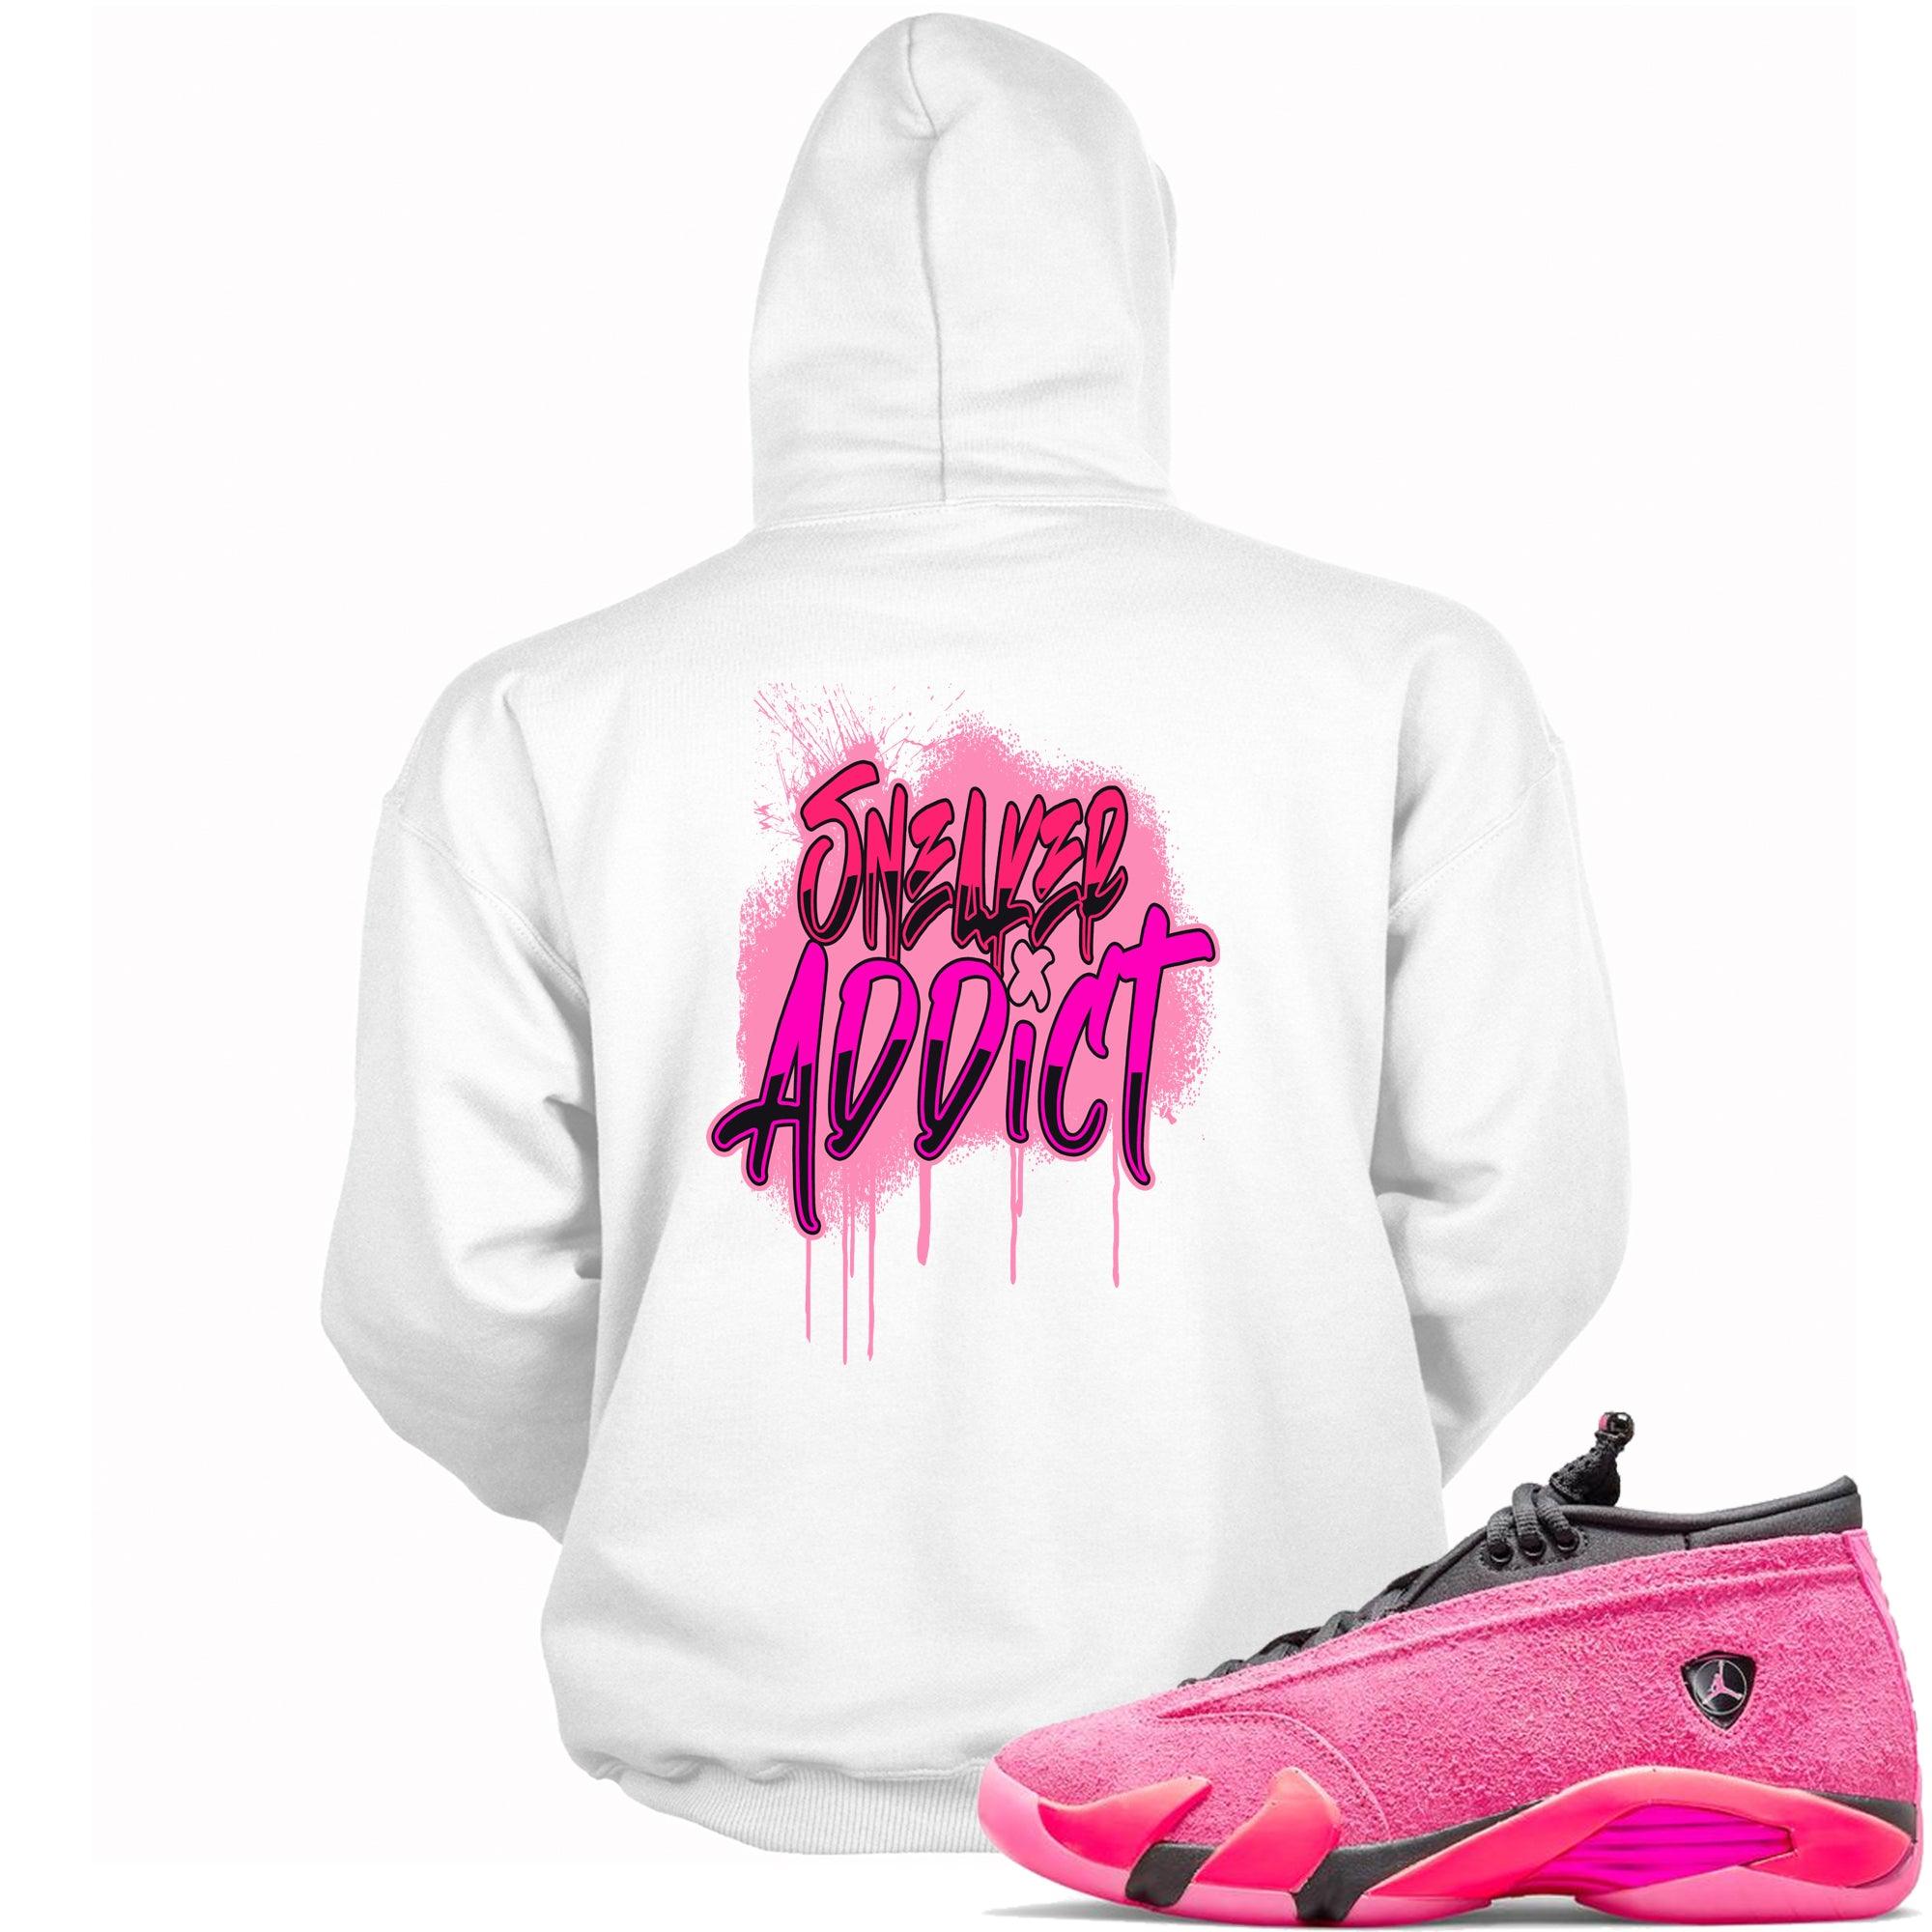 Sneaker Addict Hoodie AJ 14 Low Shocking Pink photo